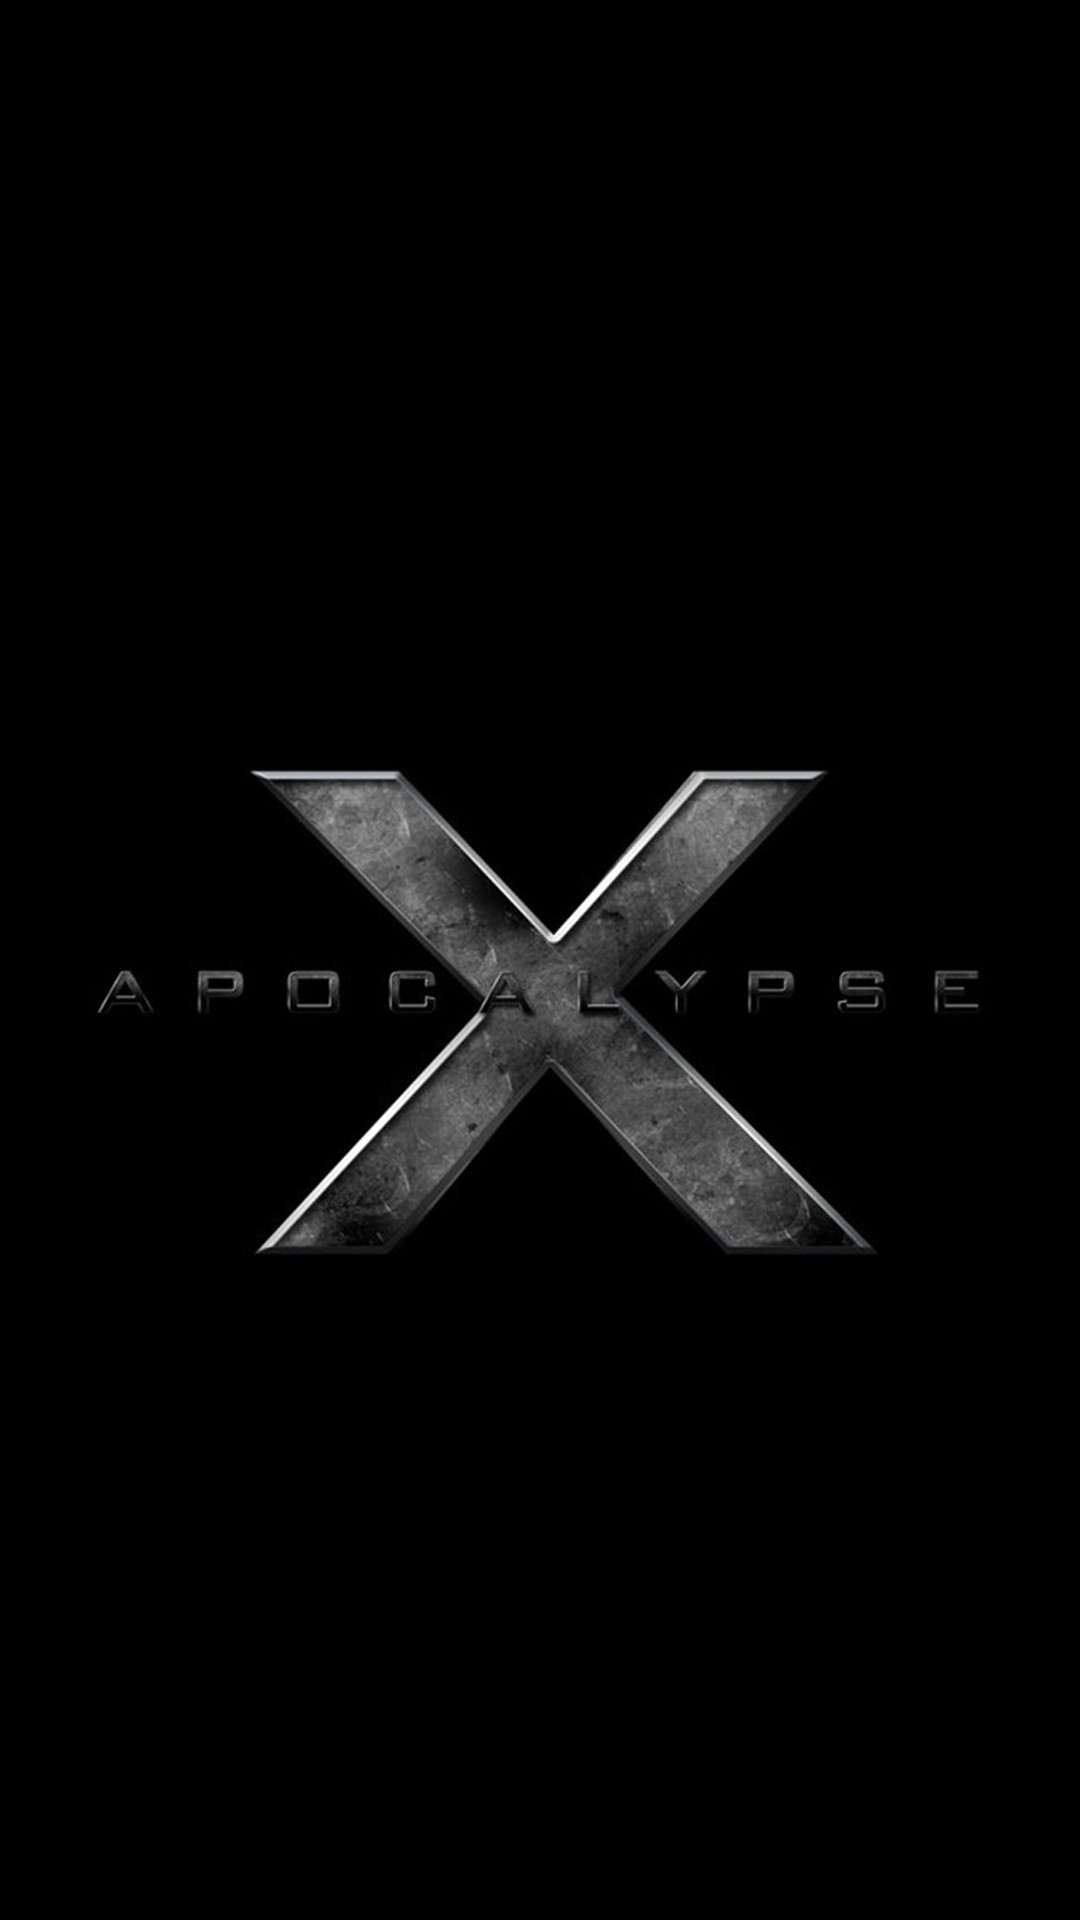 1080x1920 X-Men Apocalypse Movie Logo Android Wallpaper ...